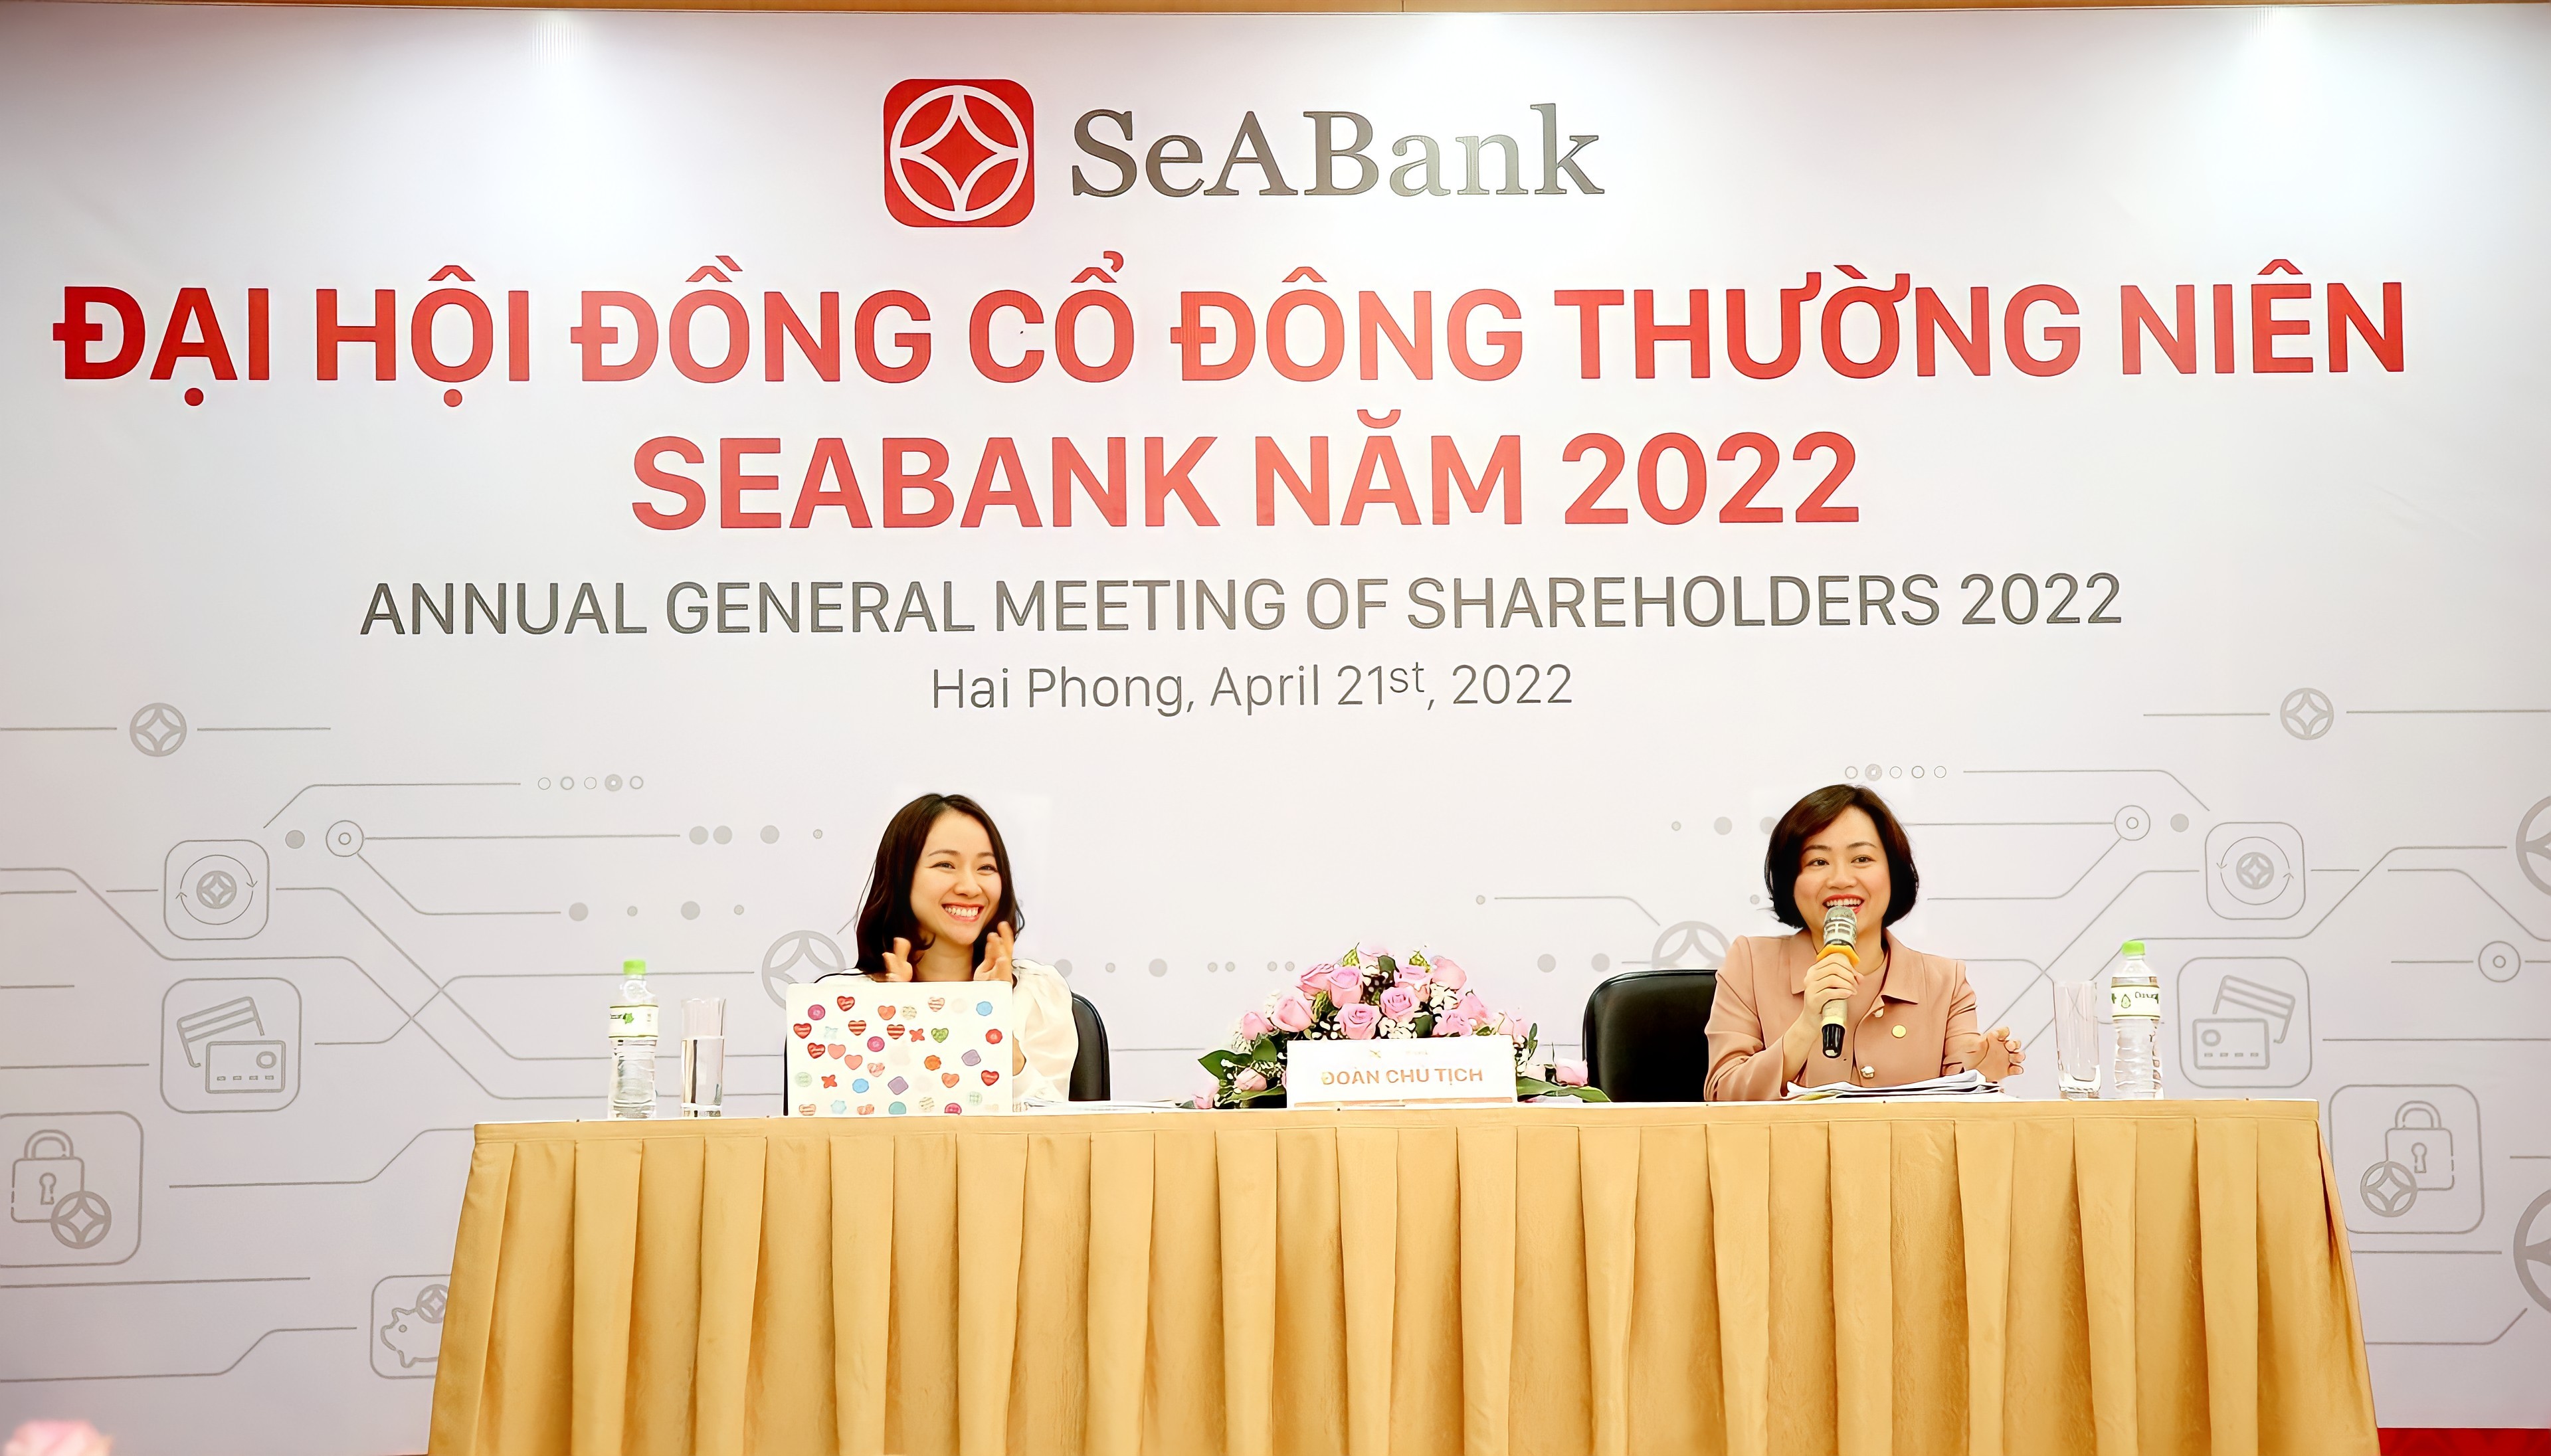 seabank-1-seabank-to-chuc-thanh-cong-dai-hoi-dong-co-dong-thuong-nien-2022-1650618157.jpeg